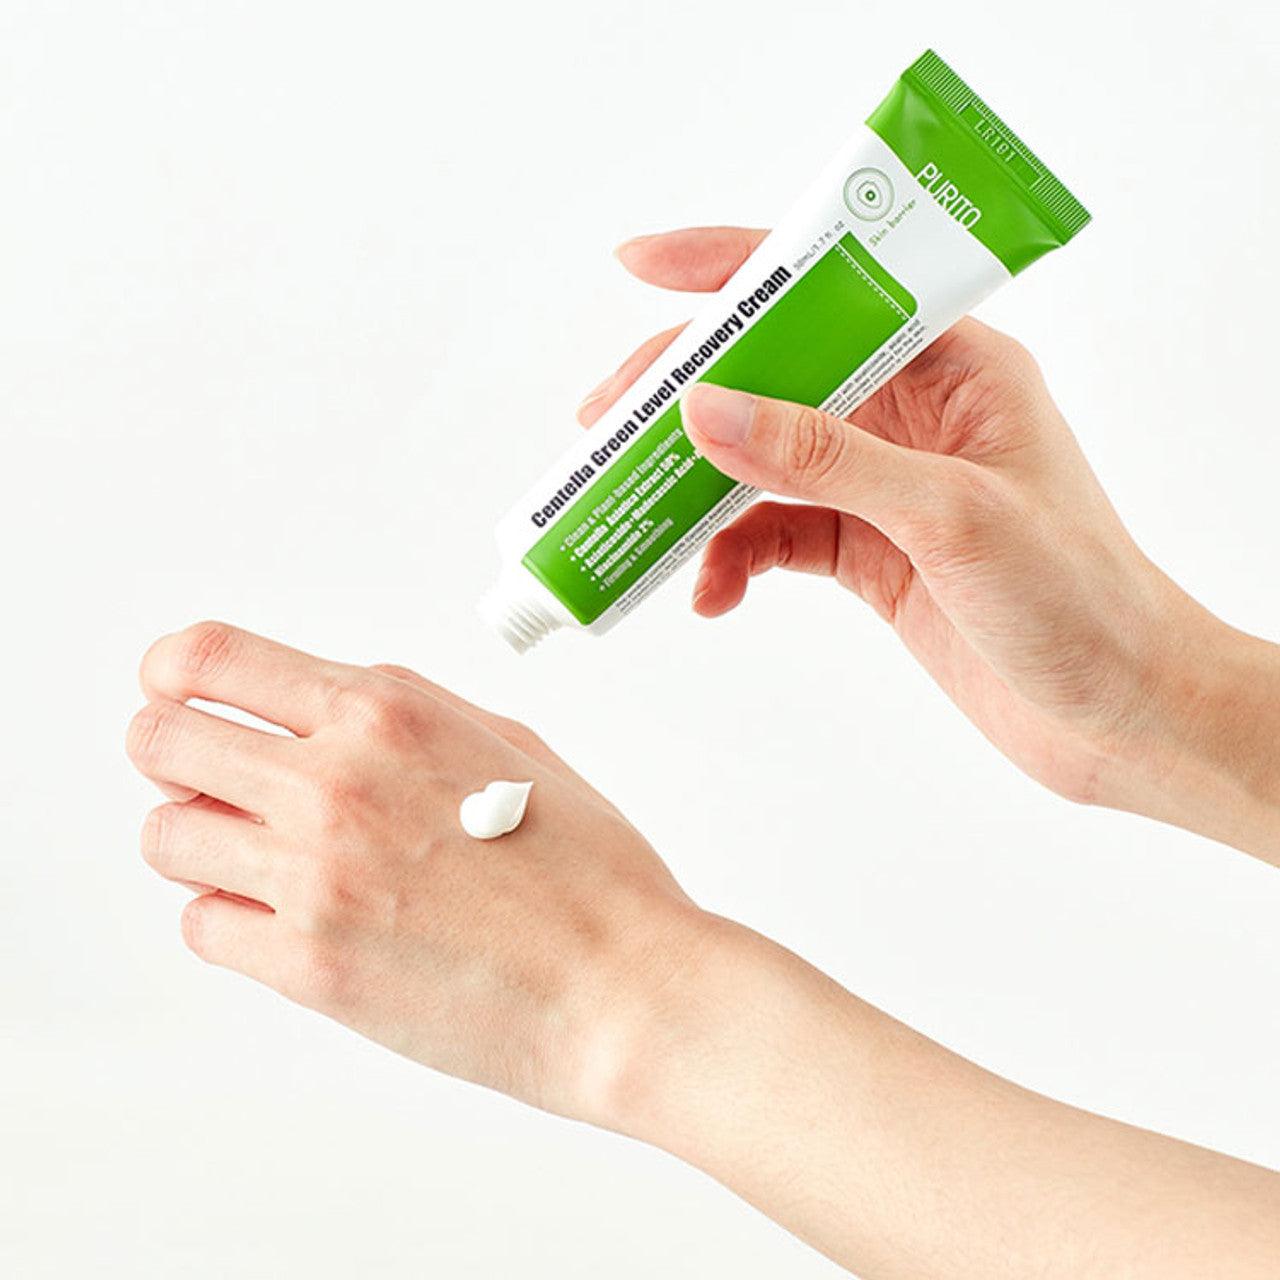 Centella Green Level Recovery Cream - 50 ml - K-Beauty Arabia